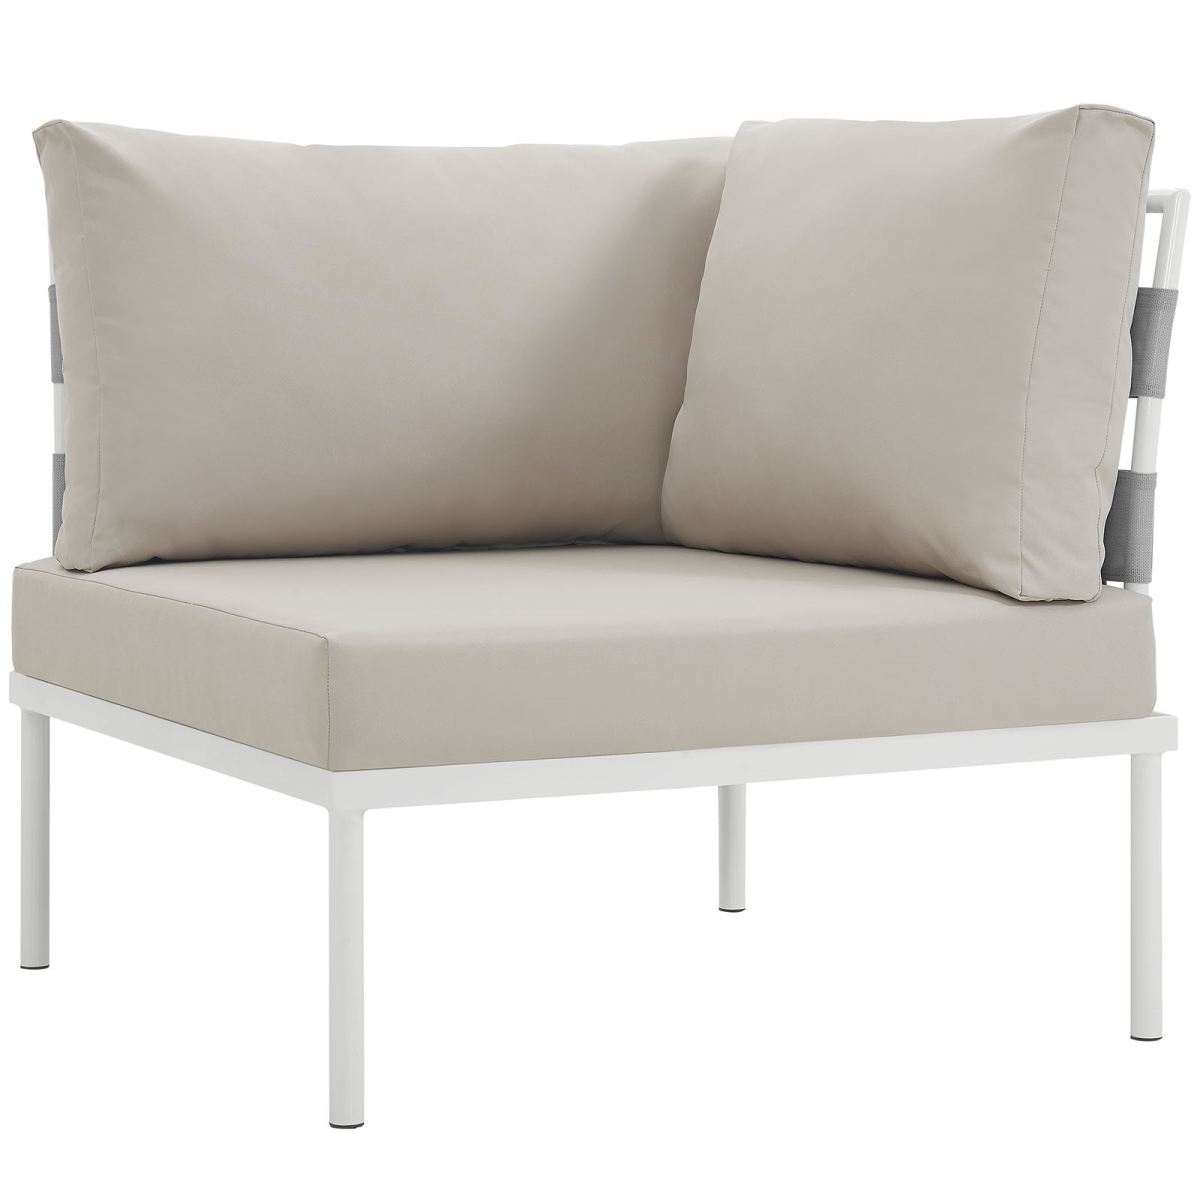 Eei-2601-whi-bei 32 X 33 In. Harmony Outdoor Patio Aluminum Corner Sofa - White & Beige